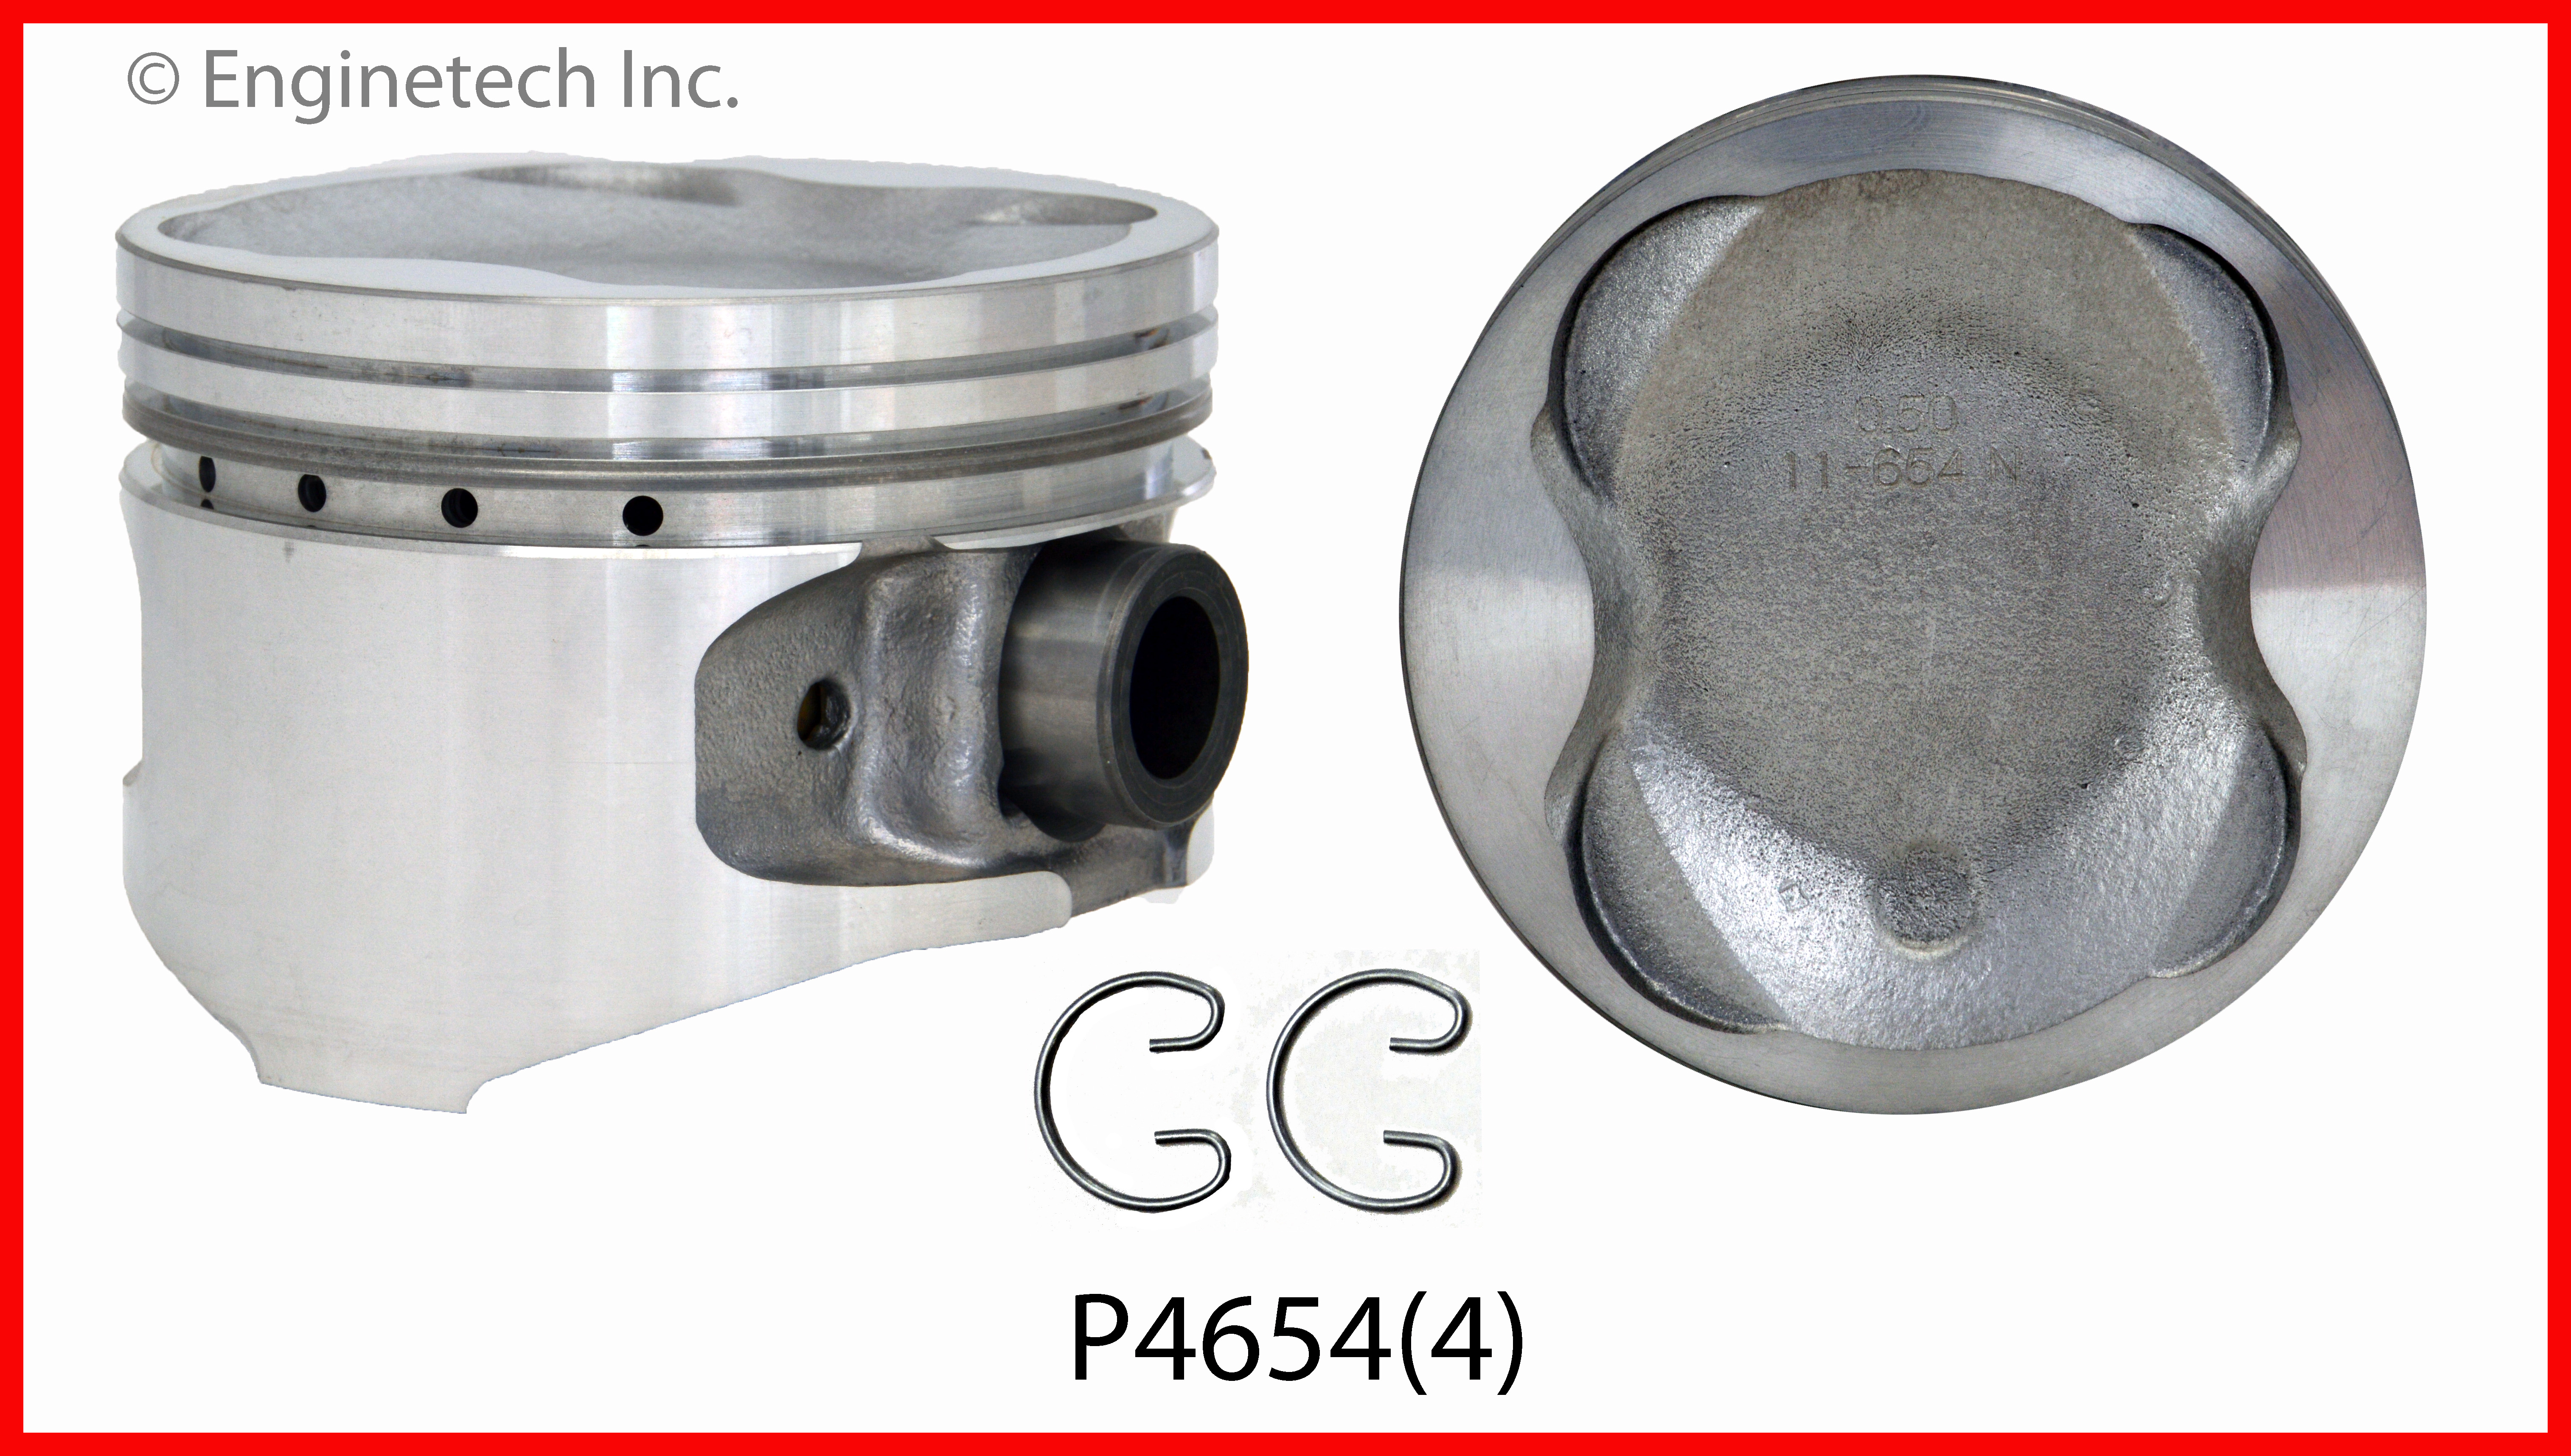 P4654(4) Piston Set Enginetech